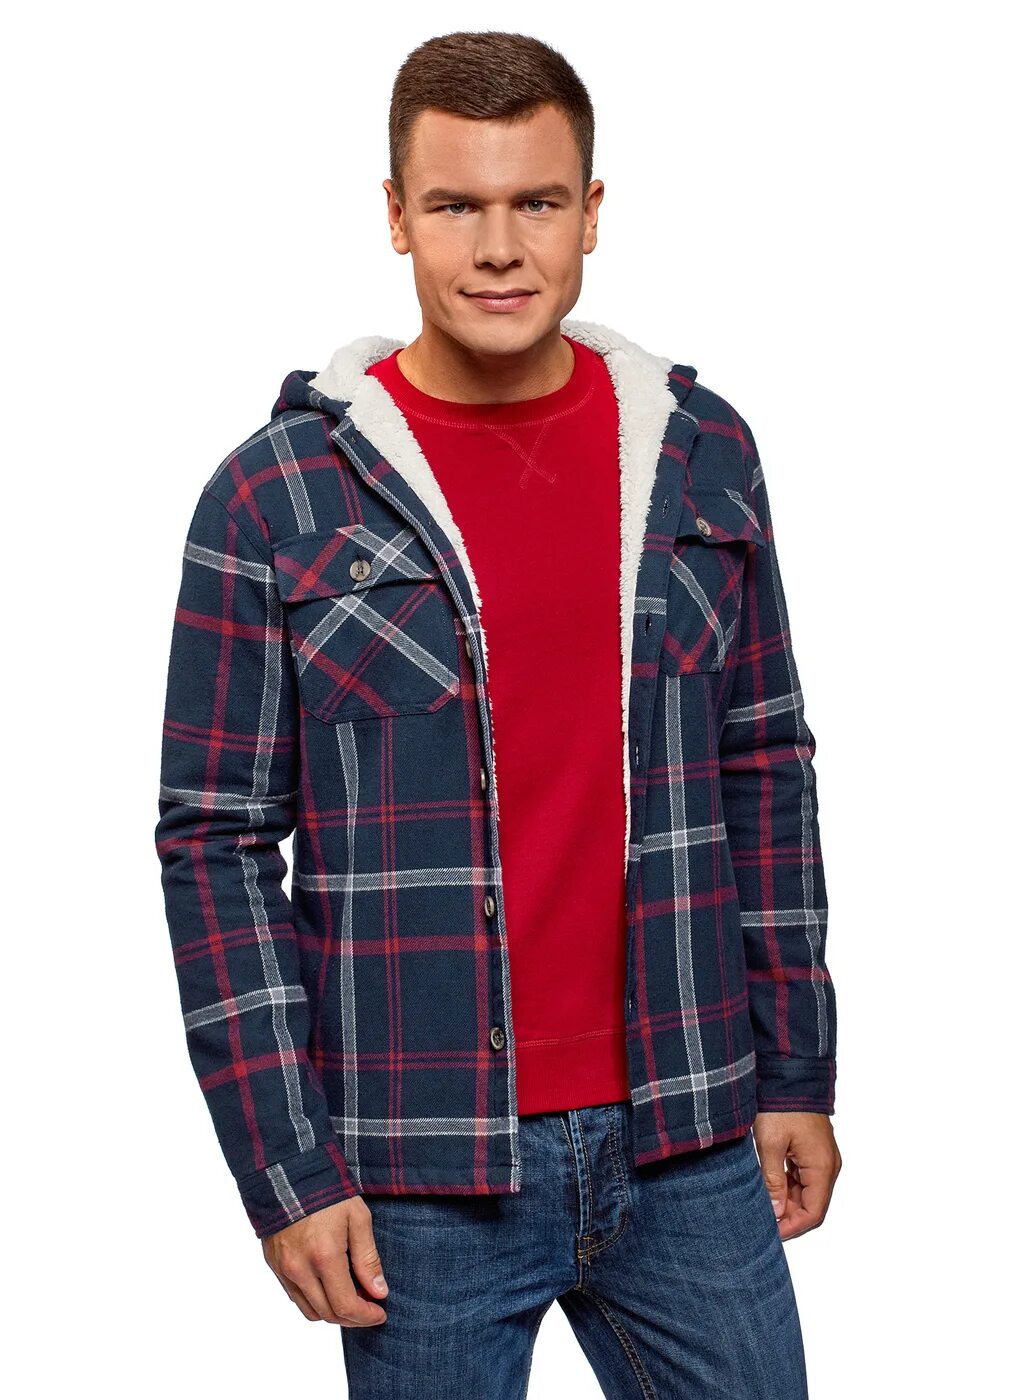 Утепленная мужская куртка рубашка Оджи. Куртка утепленная oodji мужская красная клетчатая. Oodji Lab куртка мужская с капюшоном. Oodji рубашка утепленная.